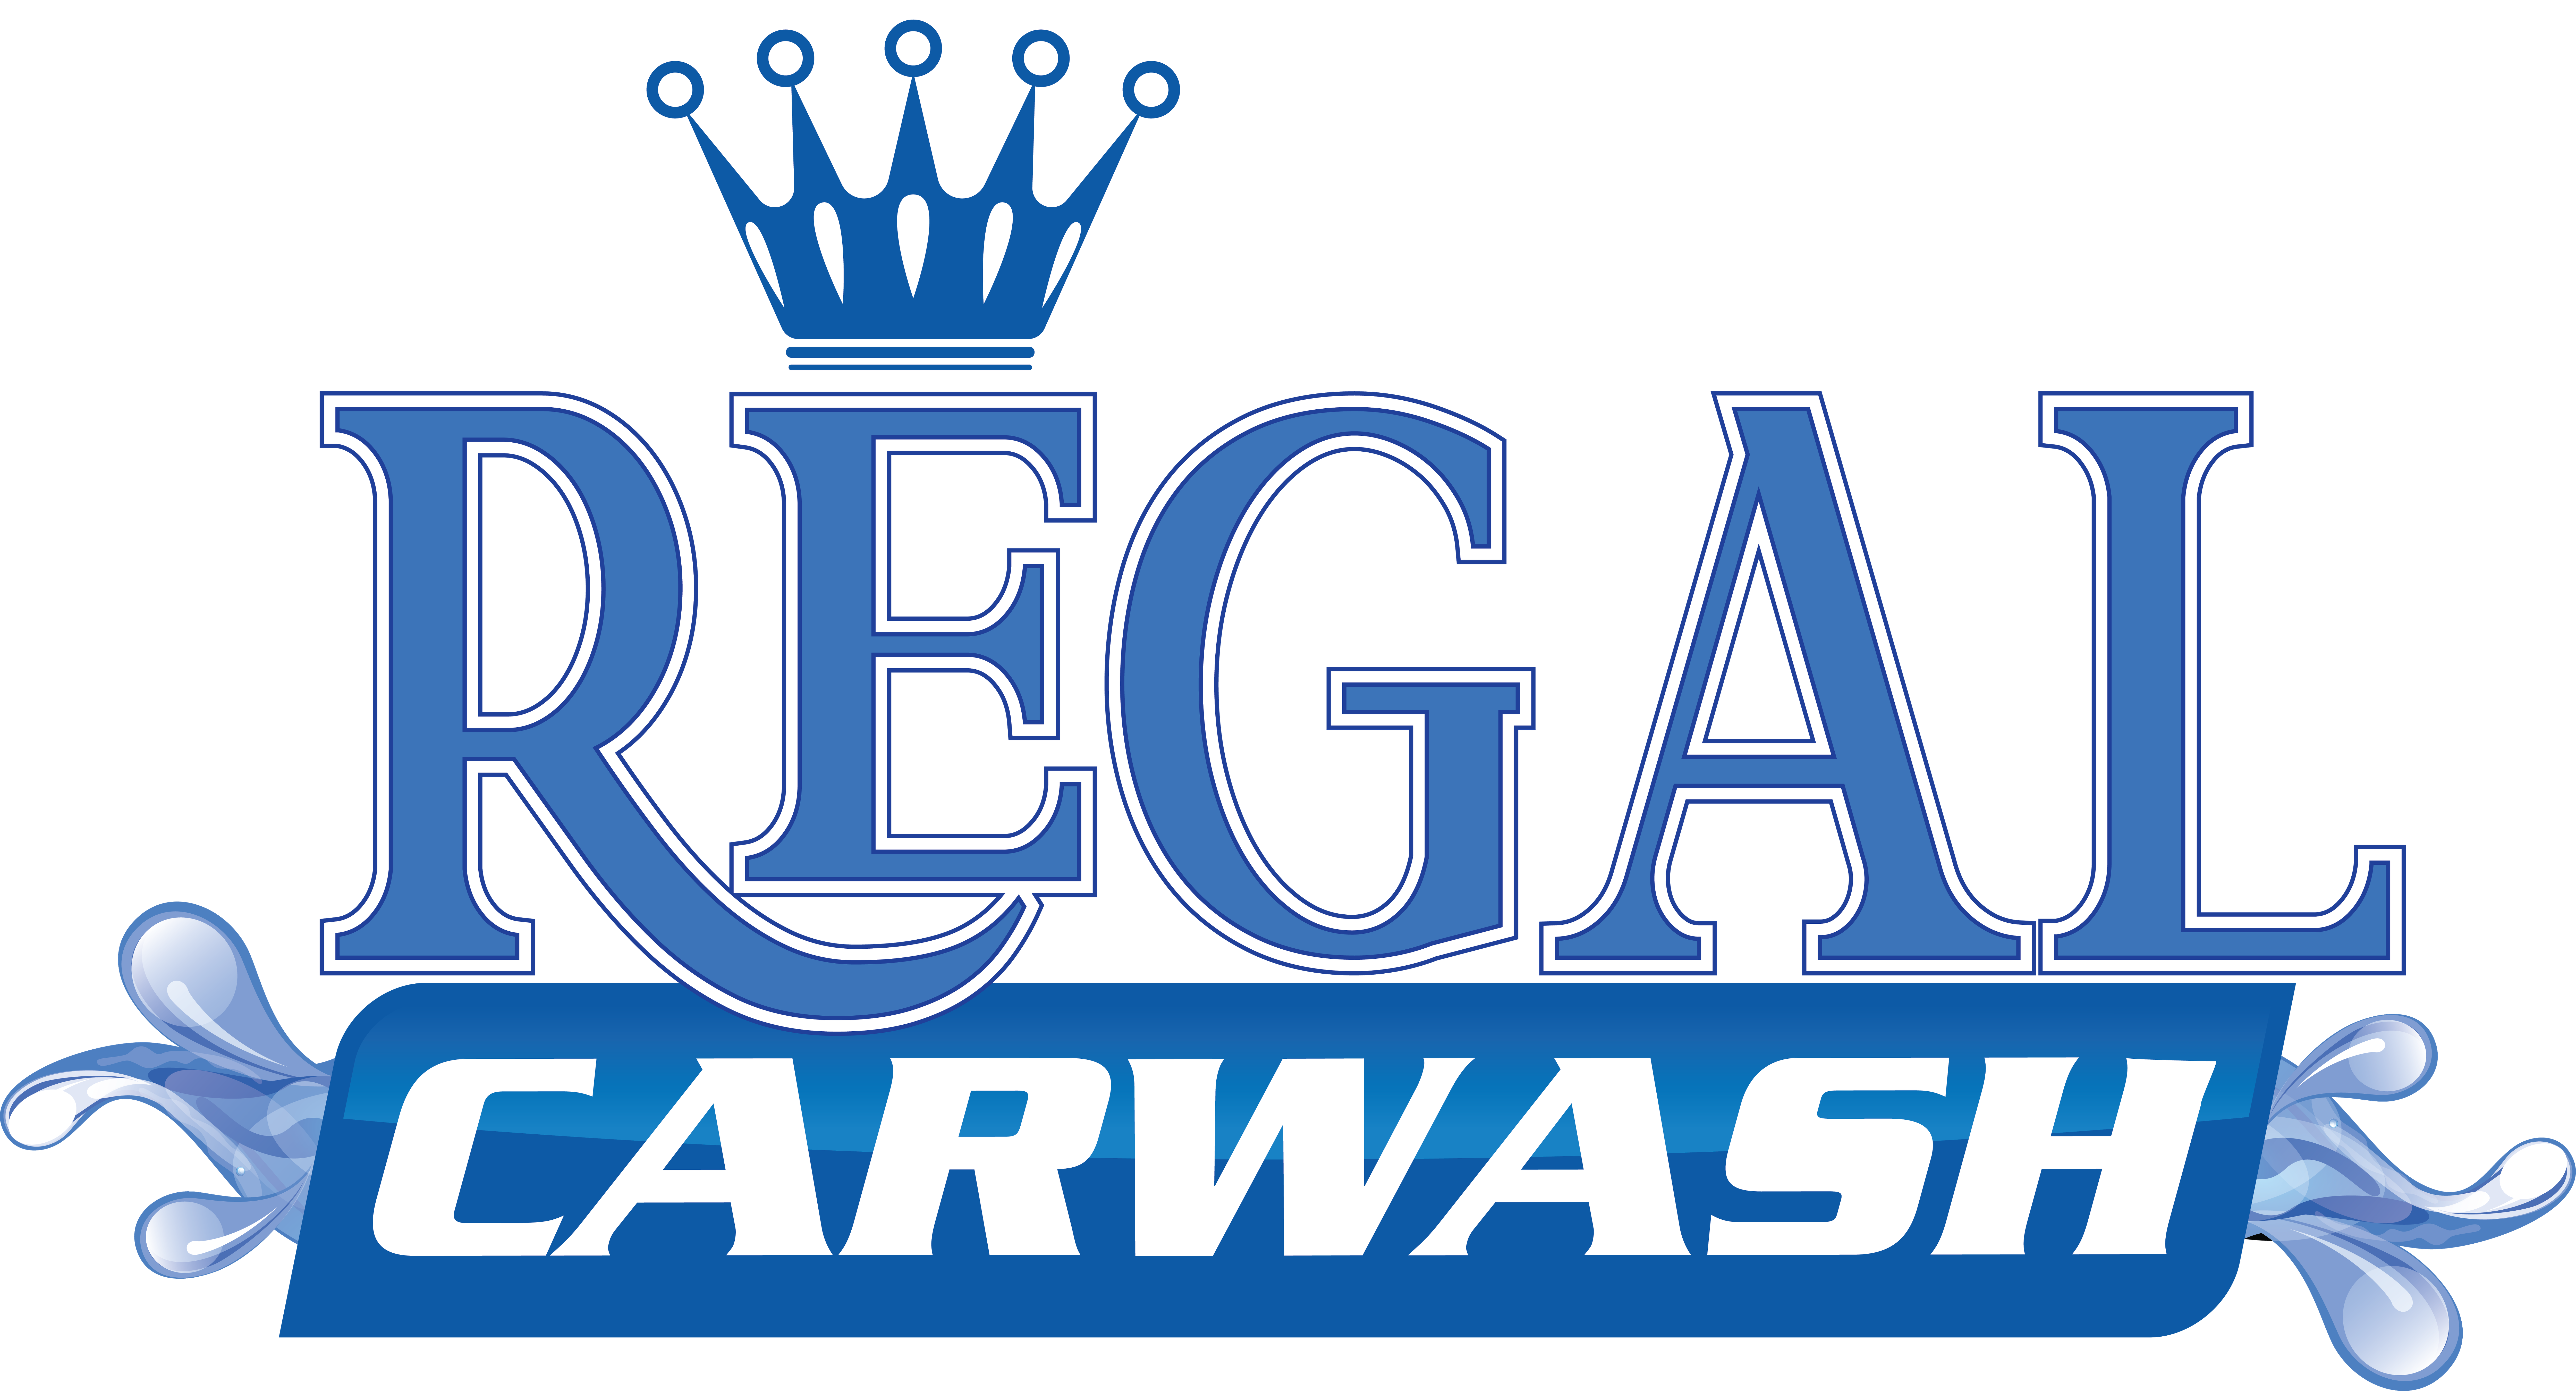 Regal Car Wash - 1430 S Broadway St, Sulphur Springs, Texas - Regal Car Wash  - Full Service Car Wash in Sulphur Springs, Texas